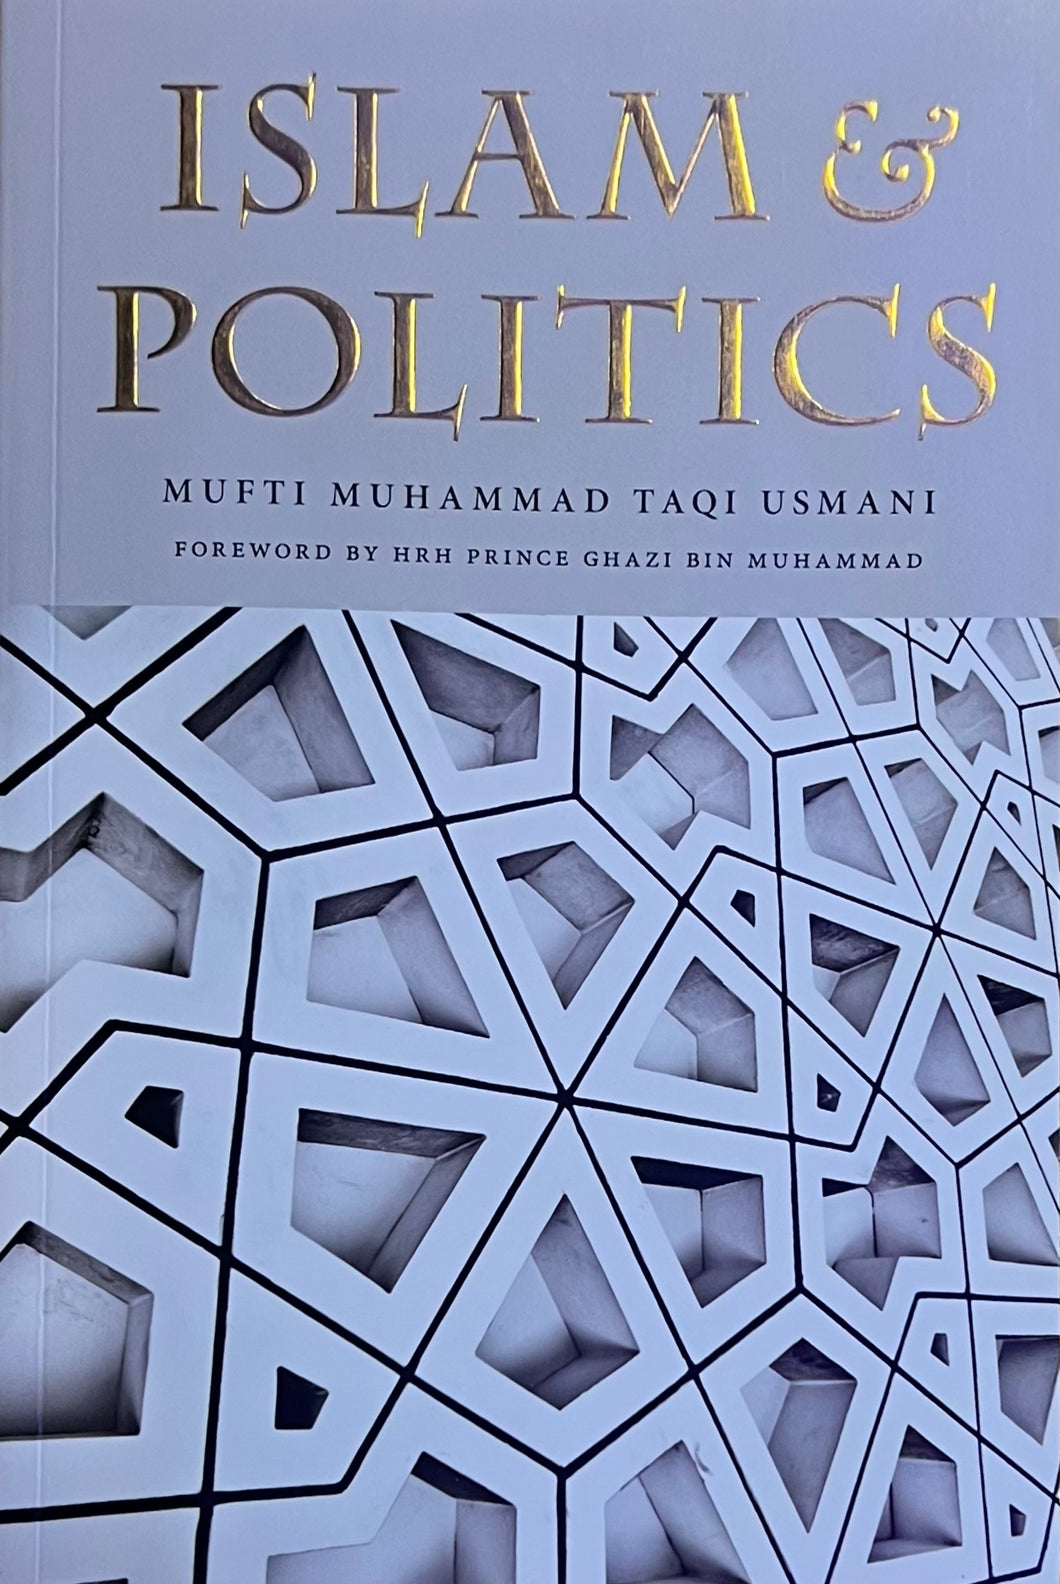 Islam & Politics